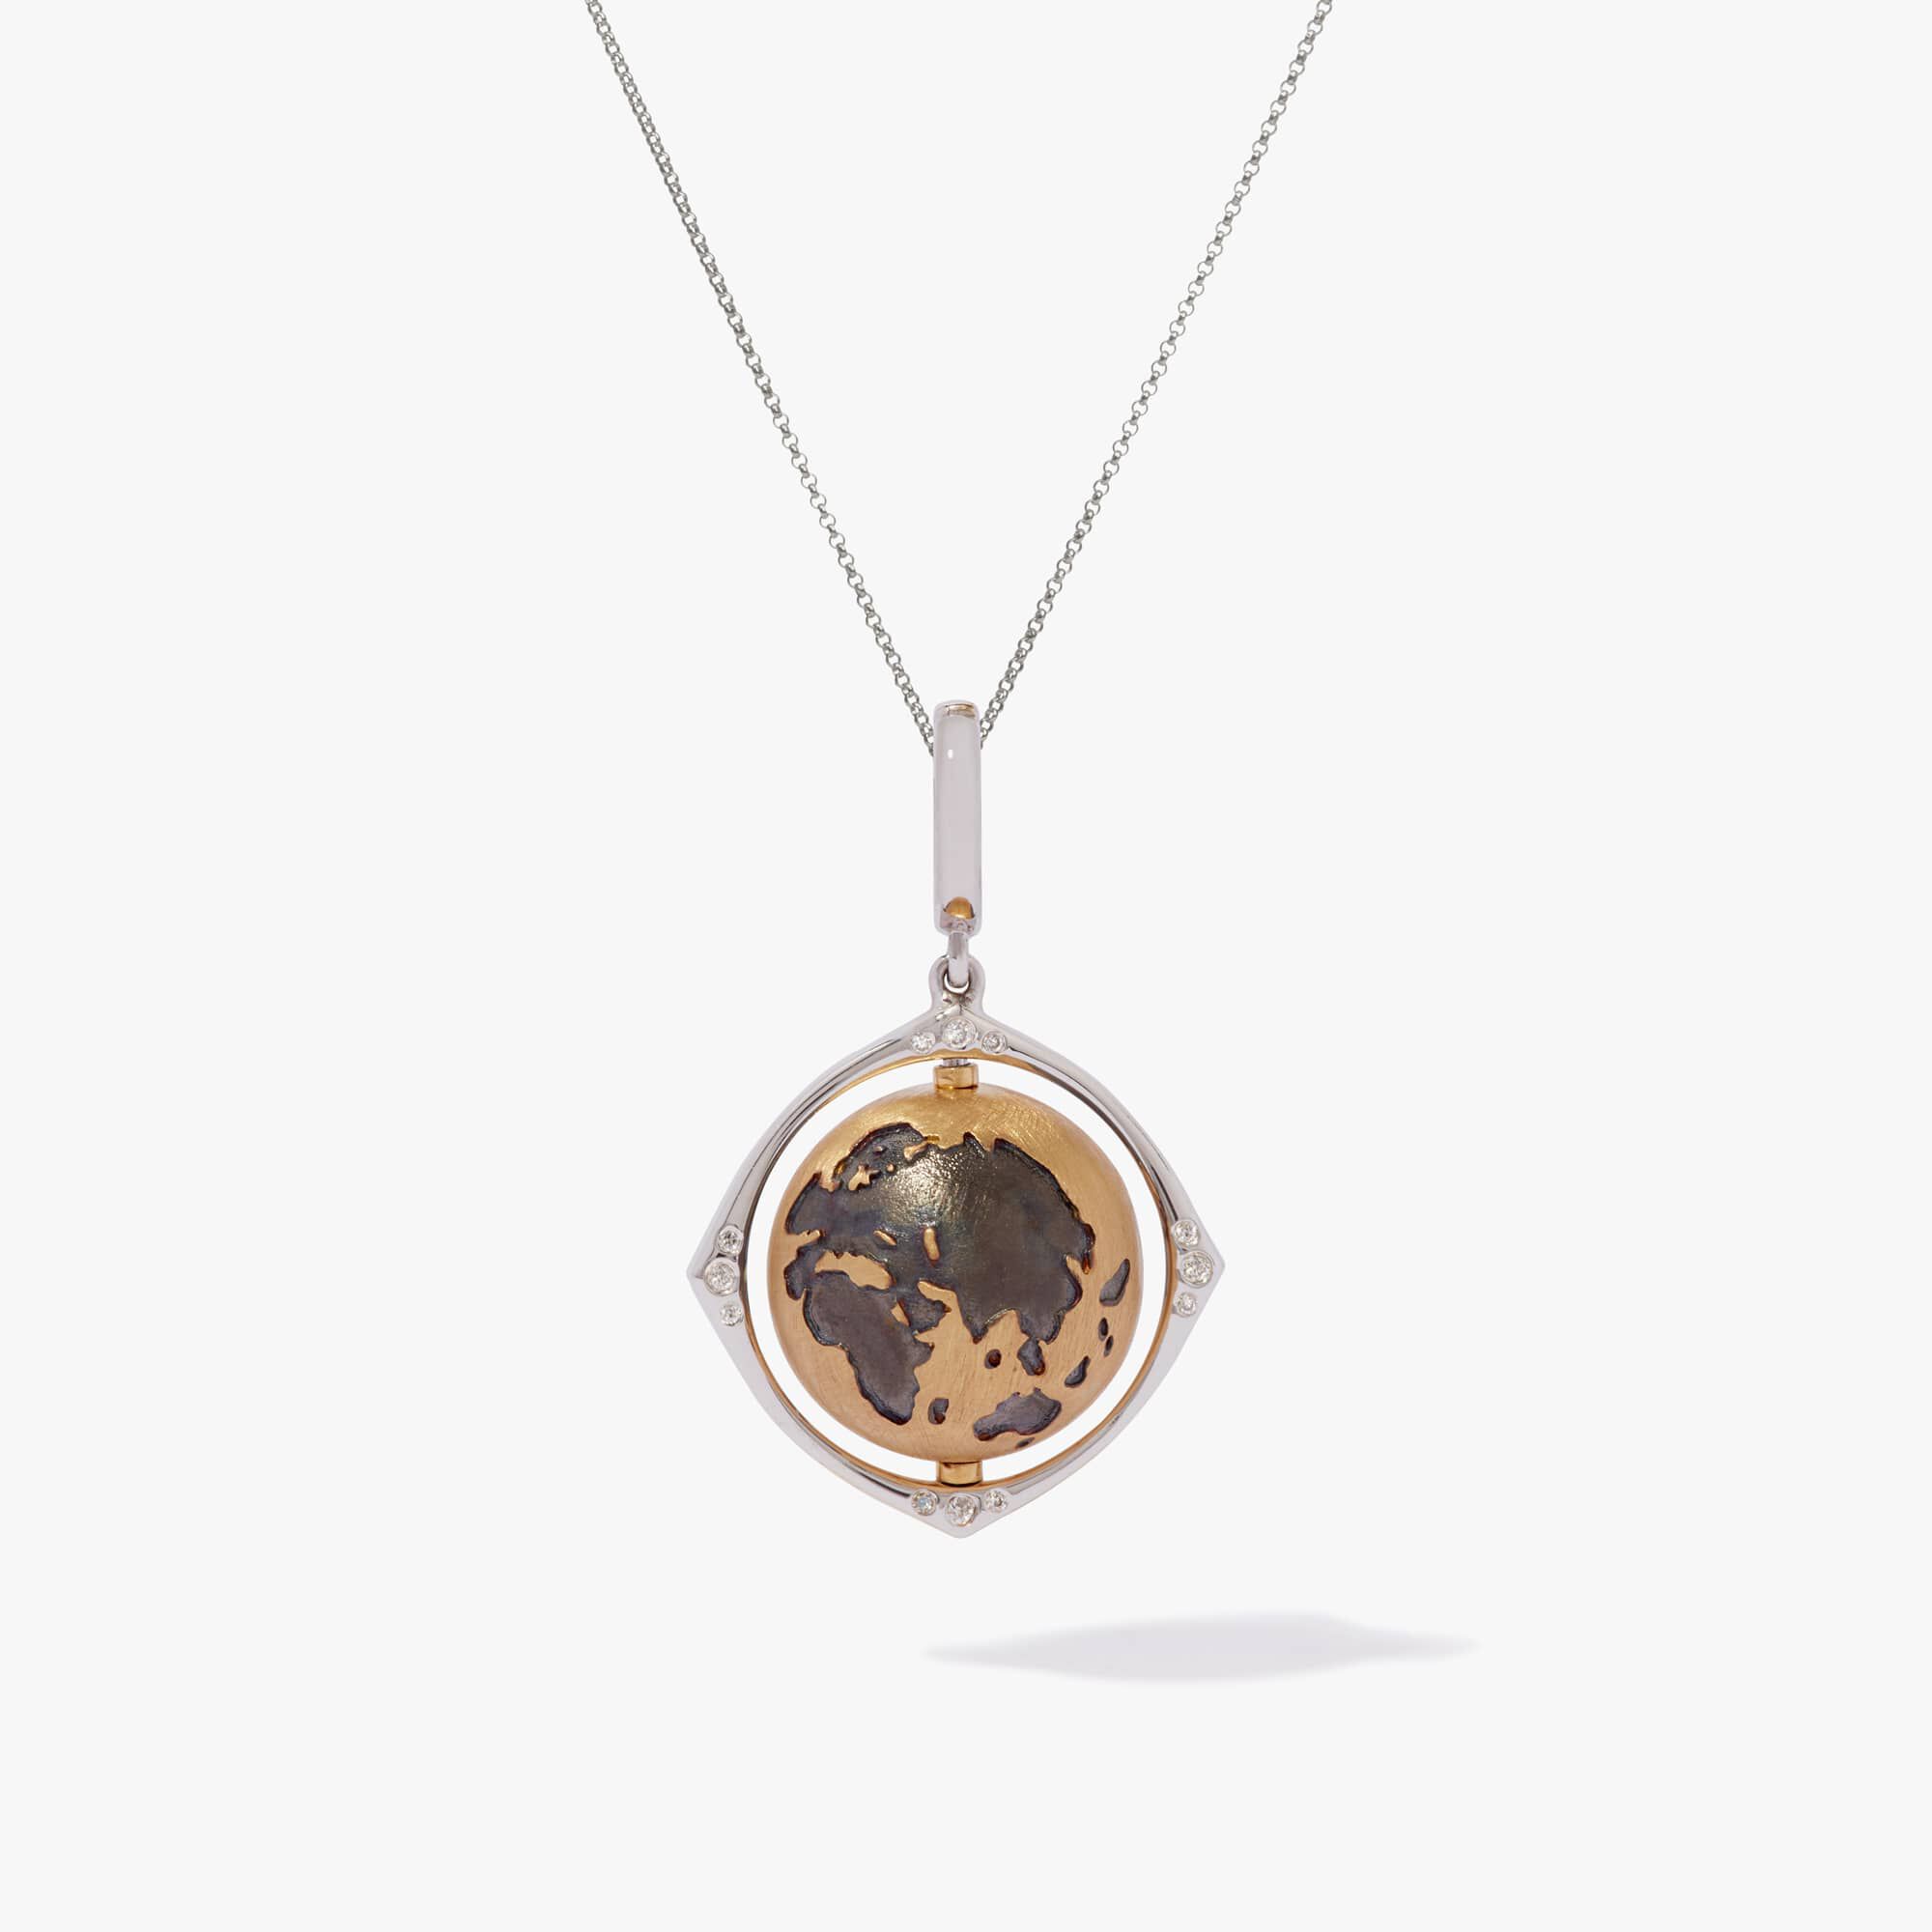 Get Golden Globe Necklace at ₹ 465 | LBB Shop